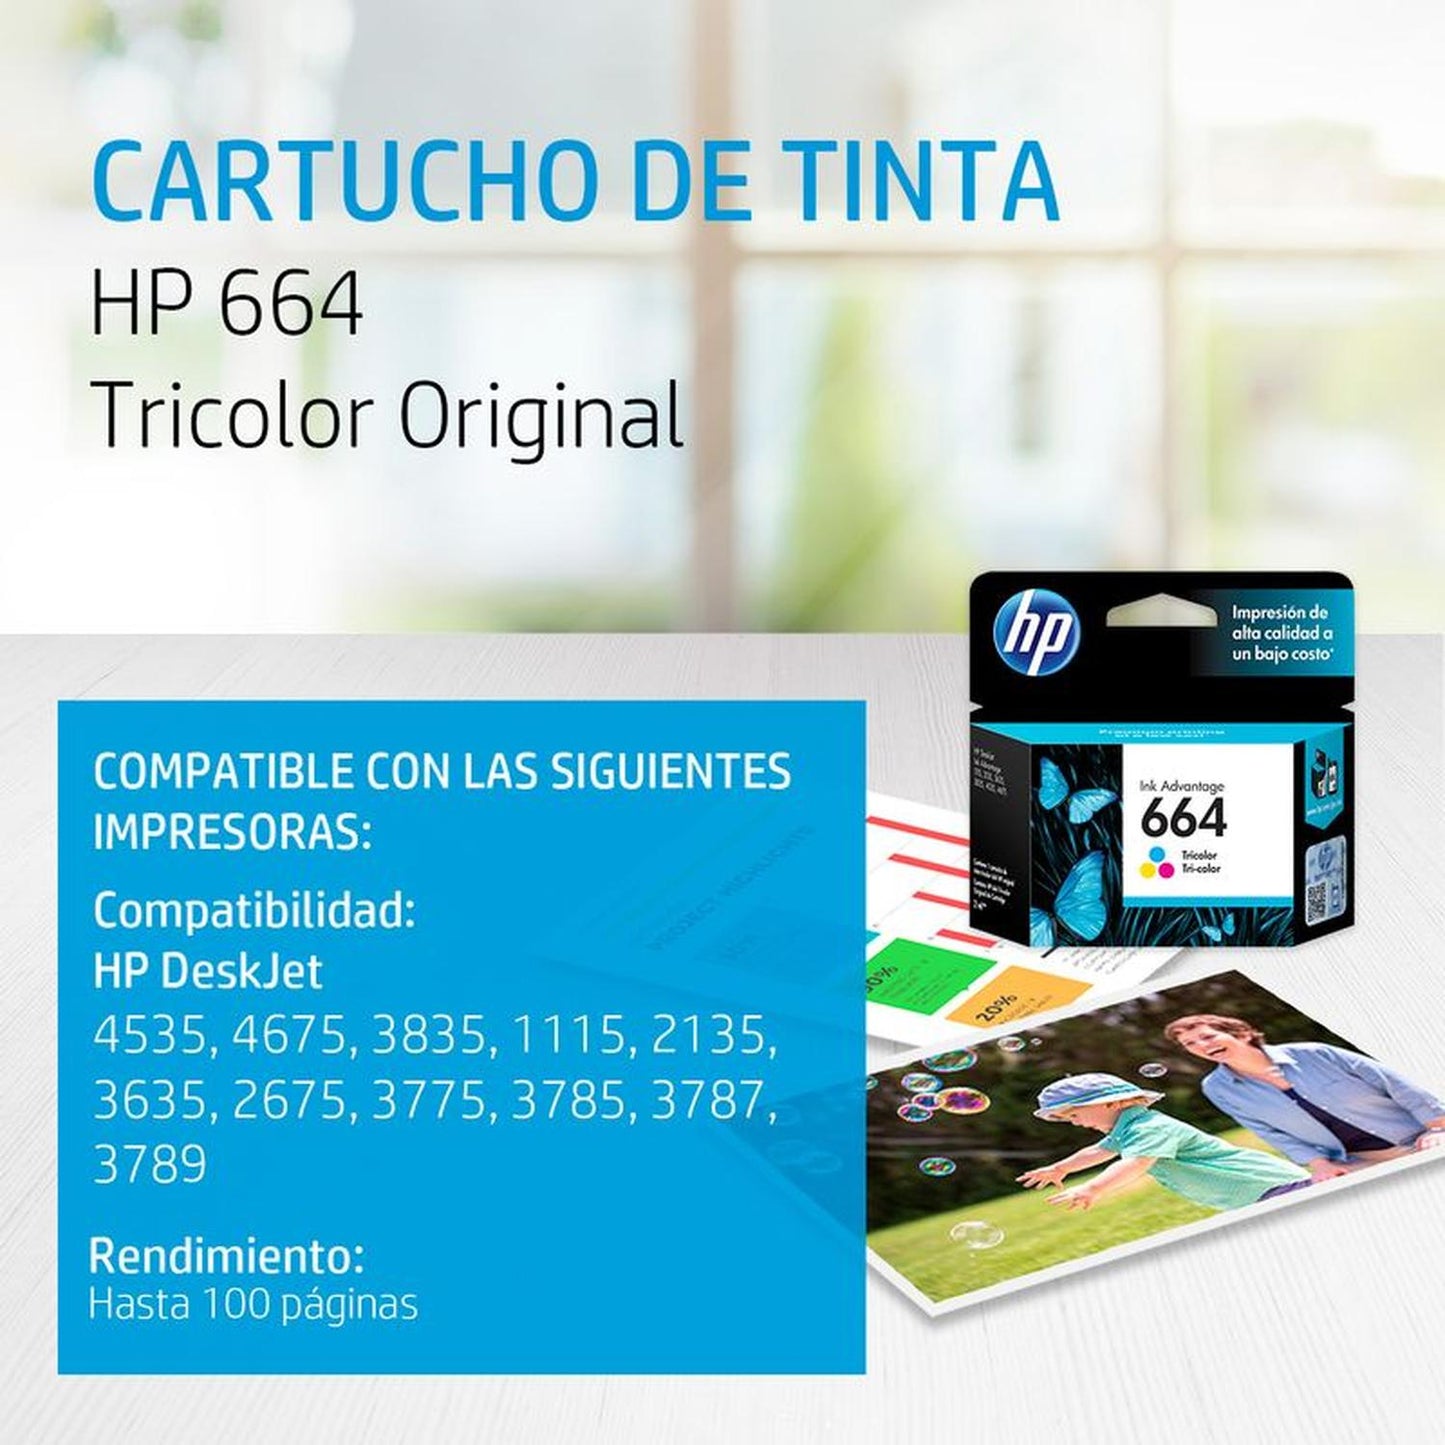 Combo de Cartuchos HP 664 de Tinta (Negro + Tri-Color), Tinta Original HP, Deskjet/HP664-KIT